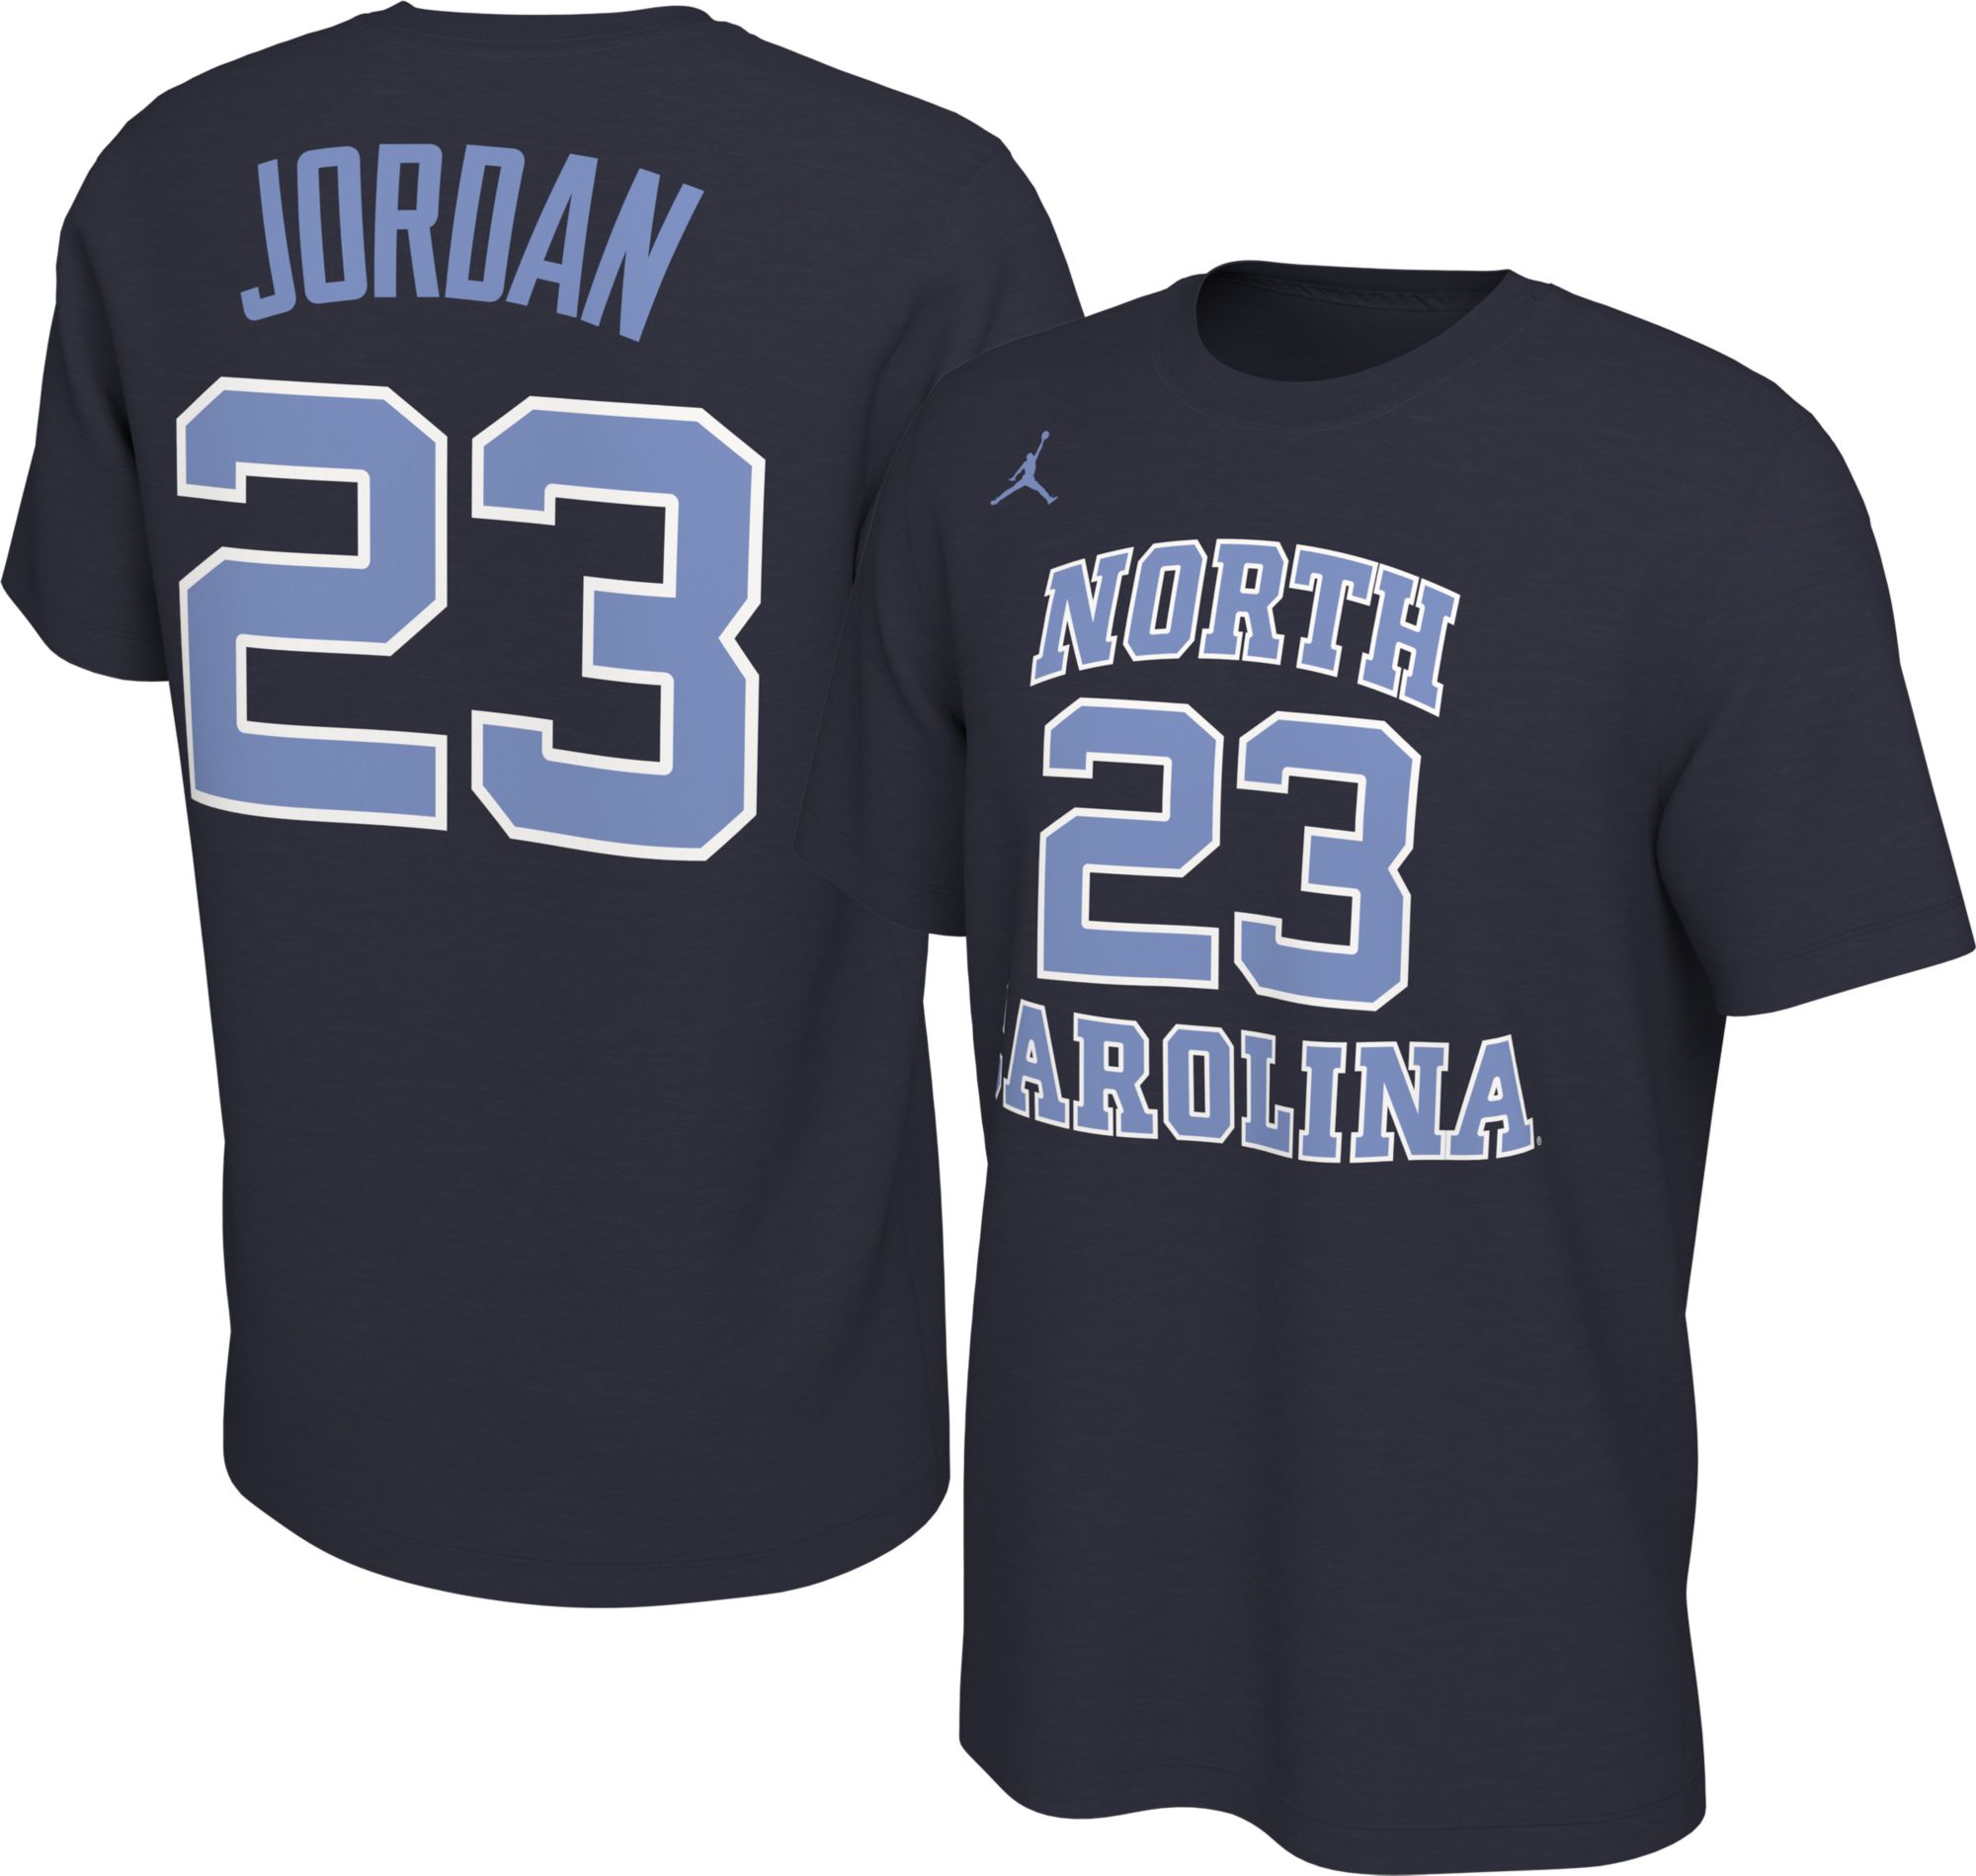 Shirts, Michael Jordan Unc Jersey